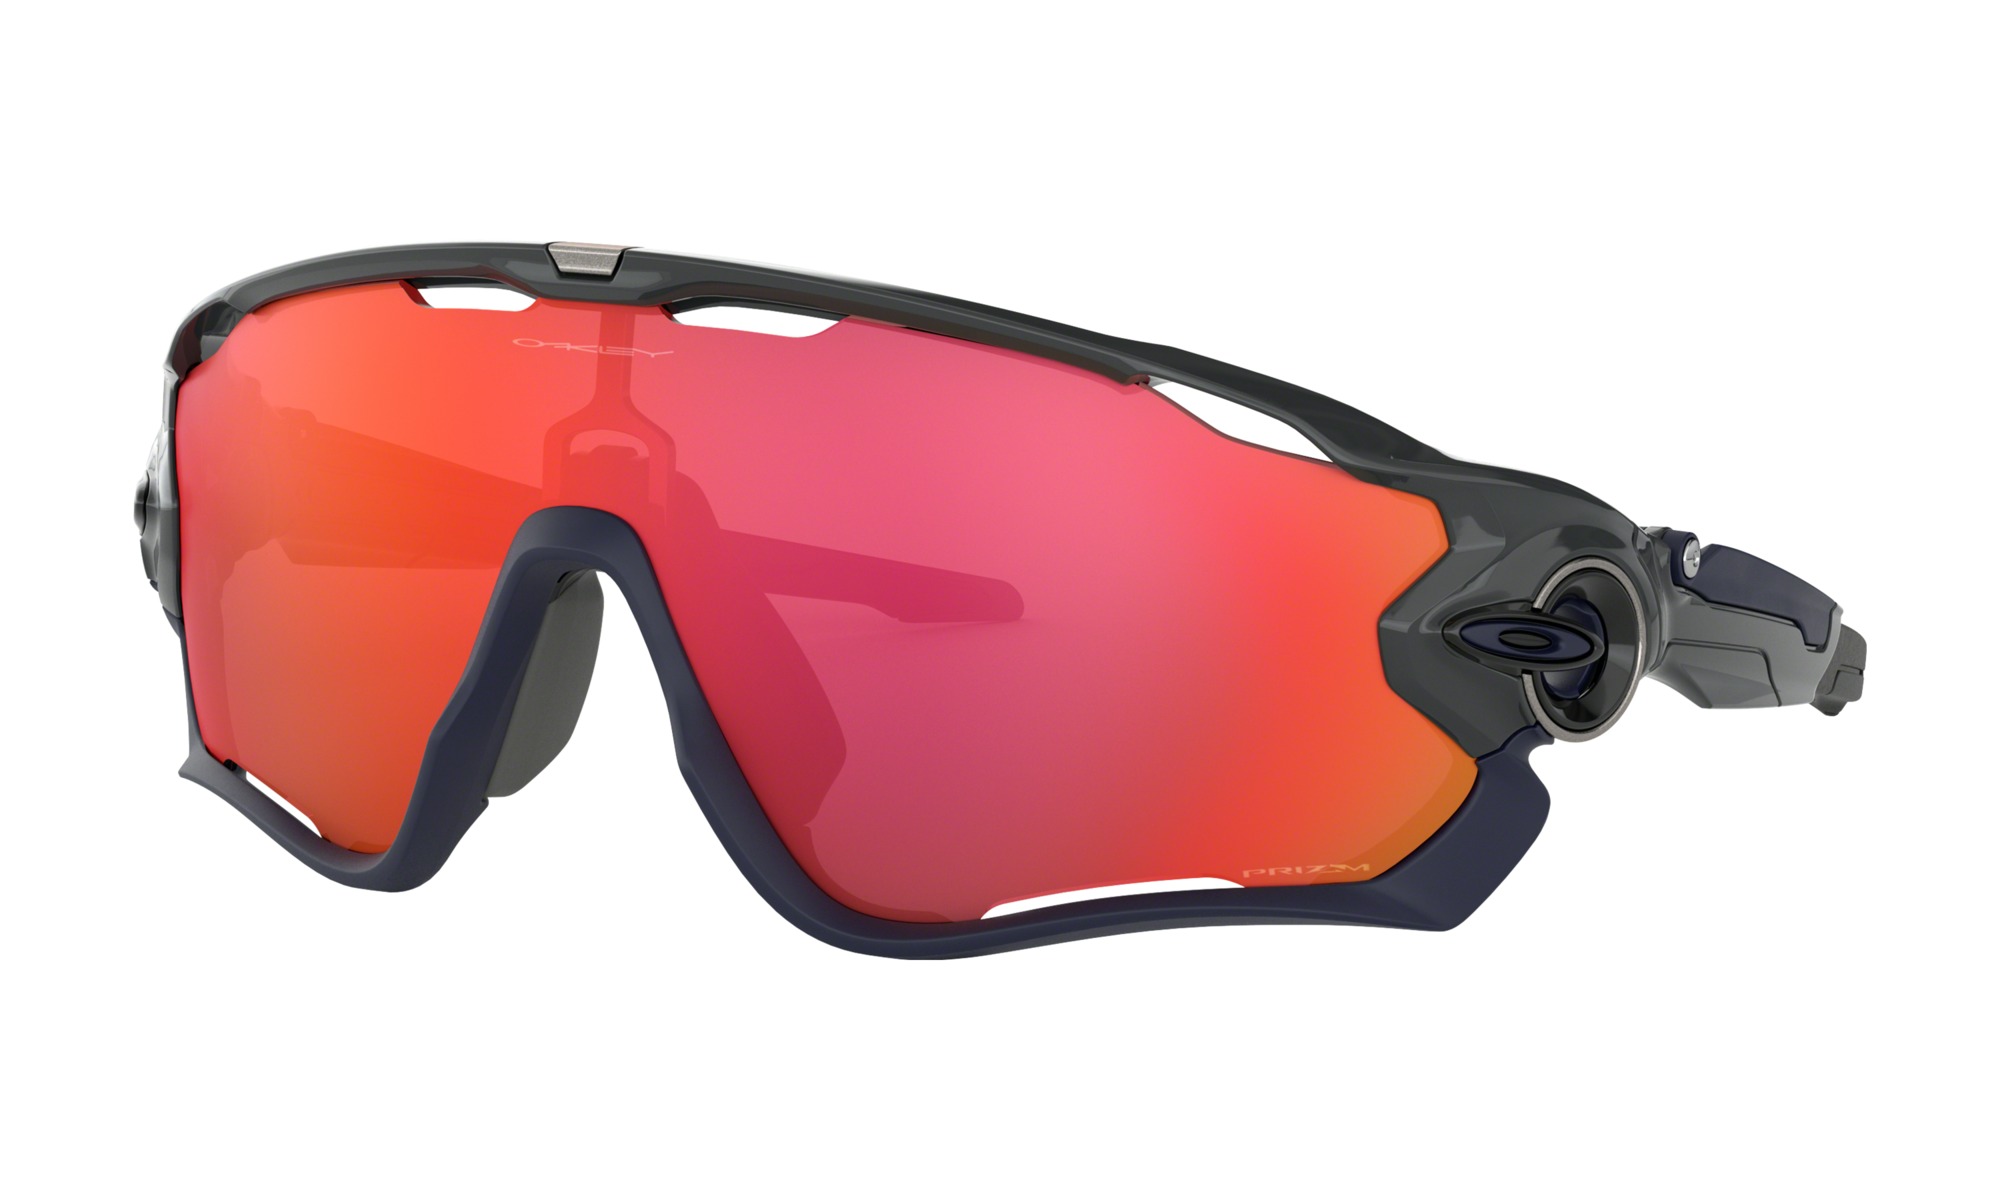 oakley mountain sunglasses